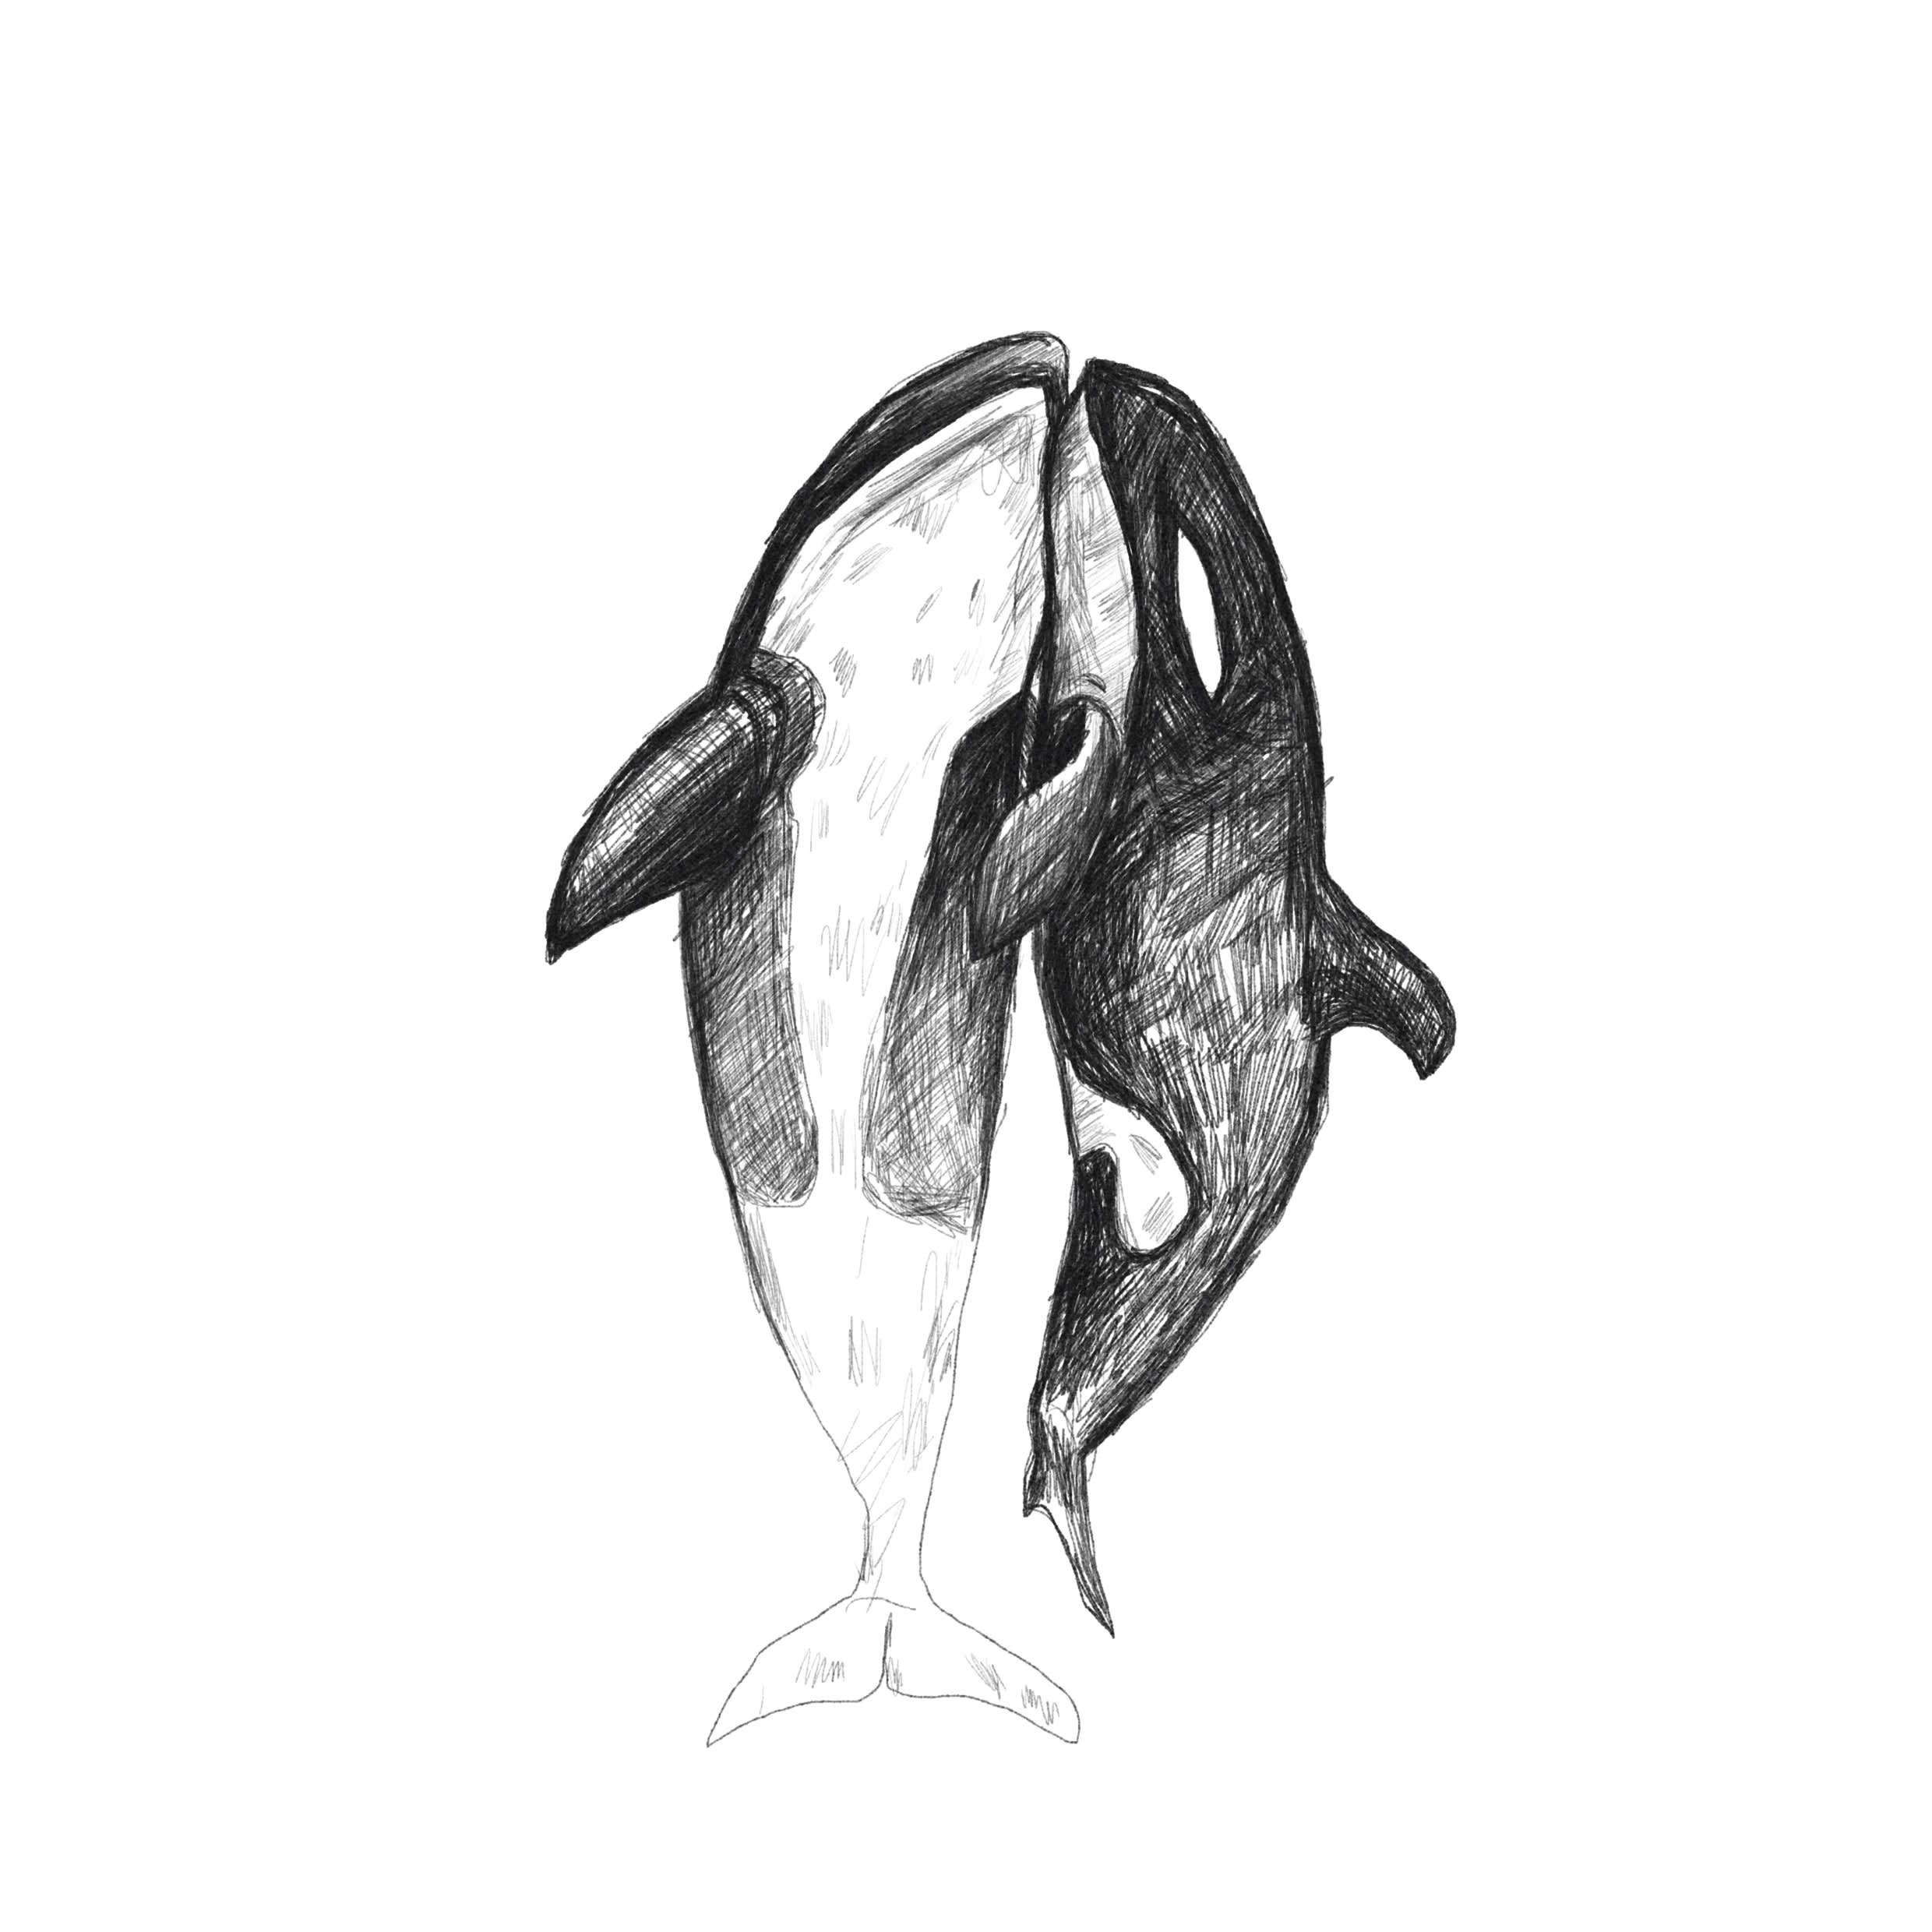 Make a sea animal pencil shading illustration image by Hitamhk | Fiverr